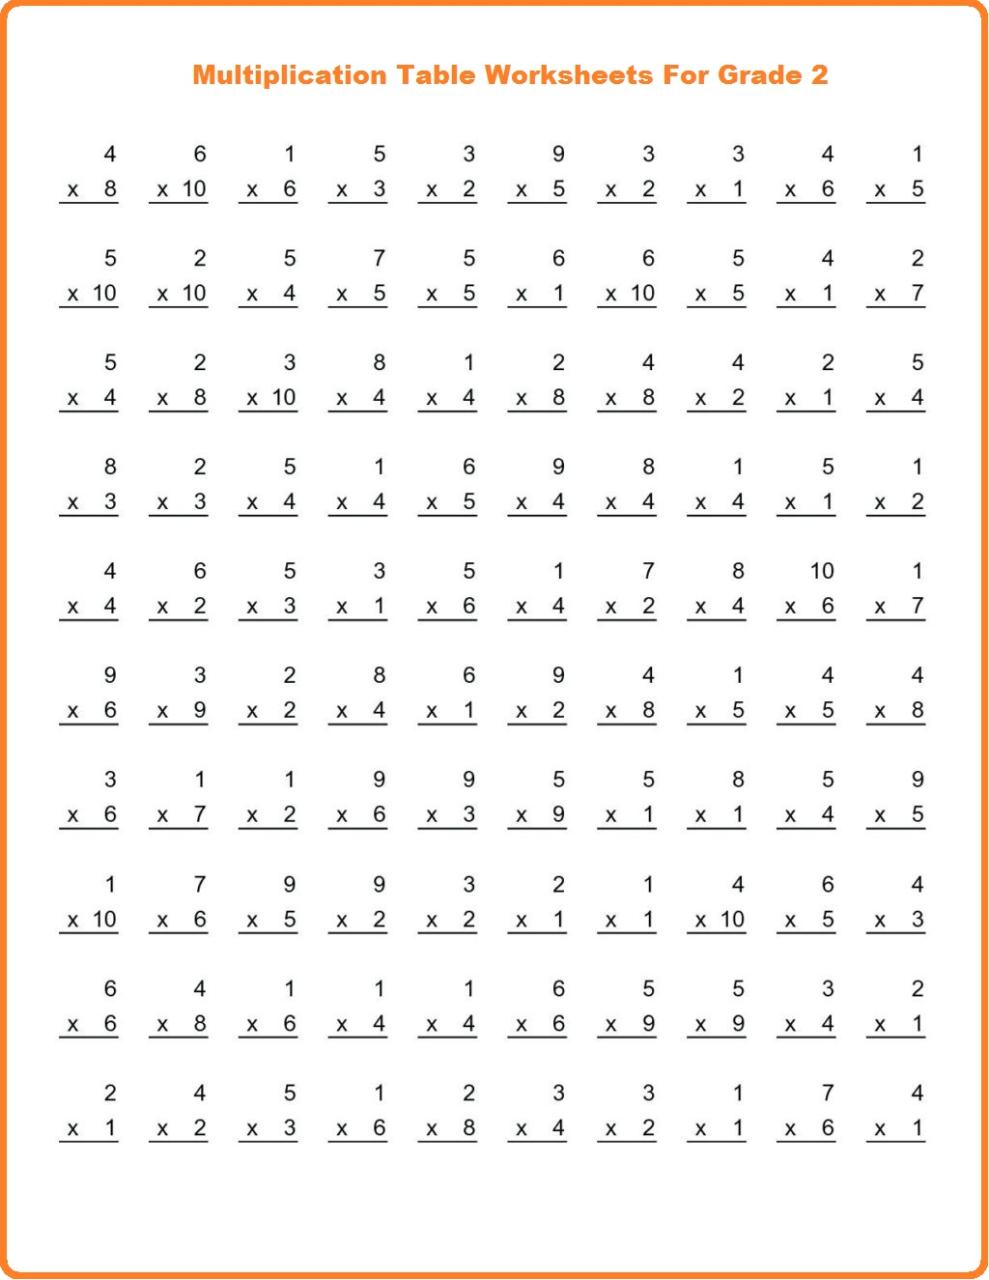 Multiplication Worksheets for Grade 2 PDF The Multiplication Table